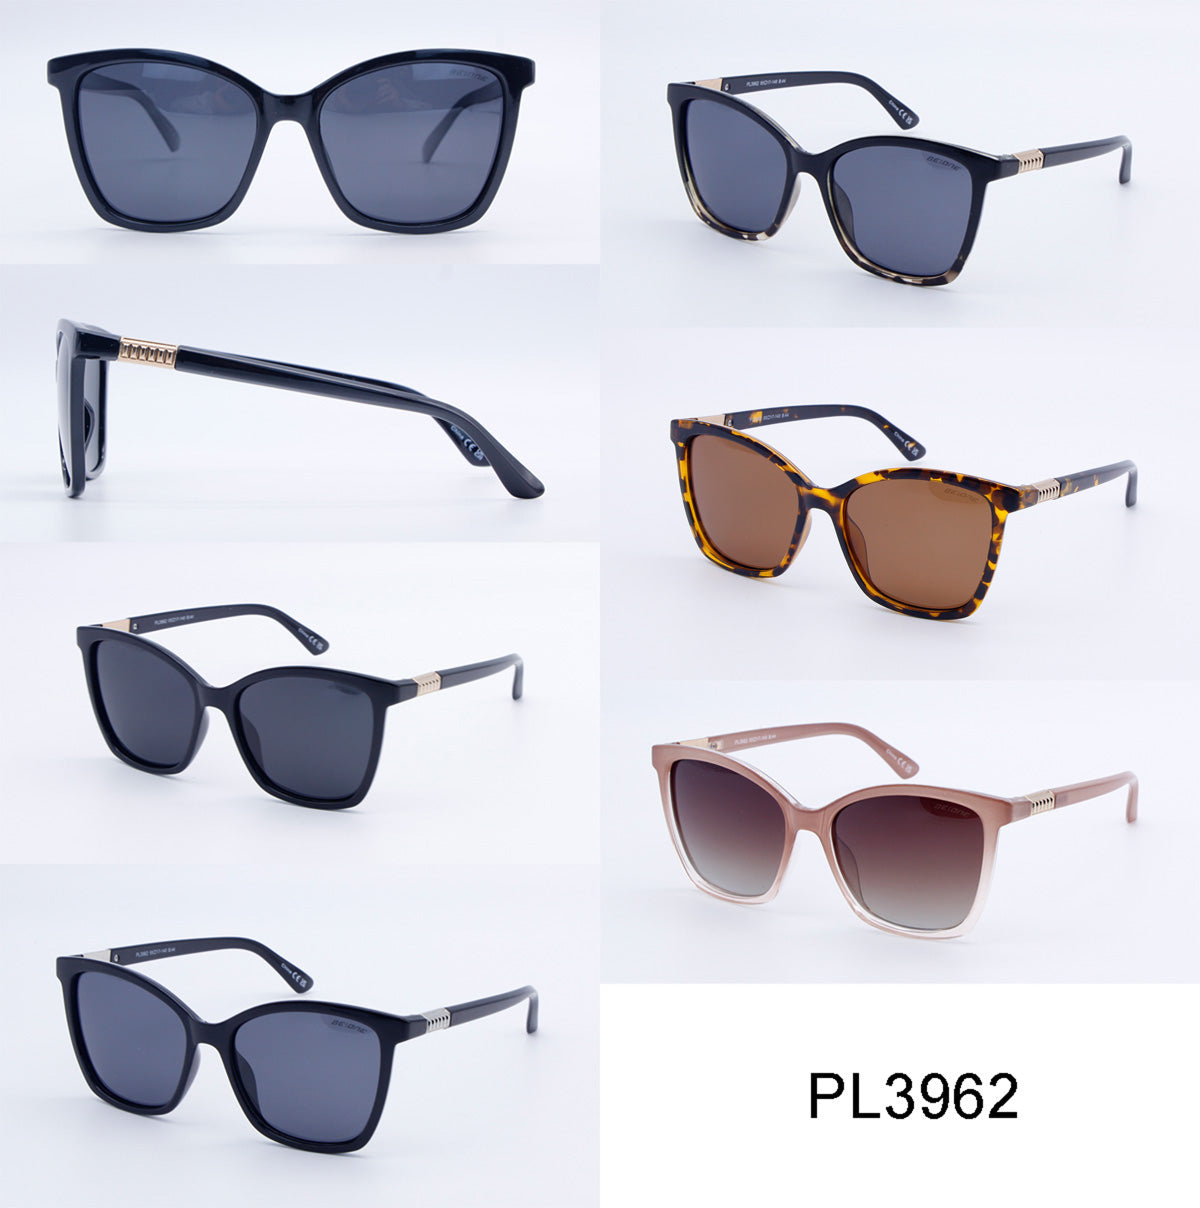 PL 3962 - Polarized Plastic Sunglasses